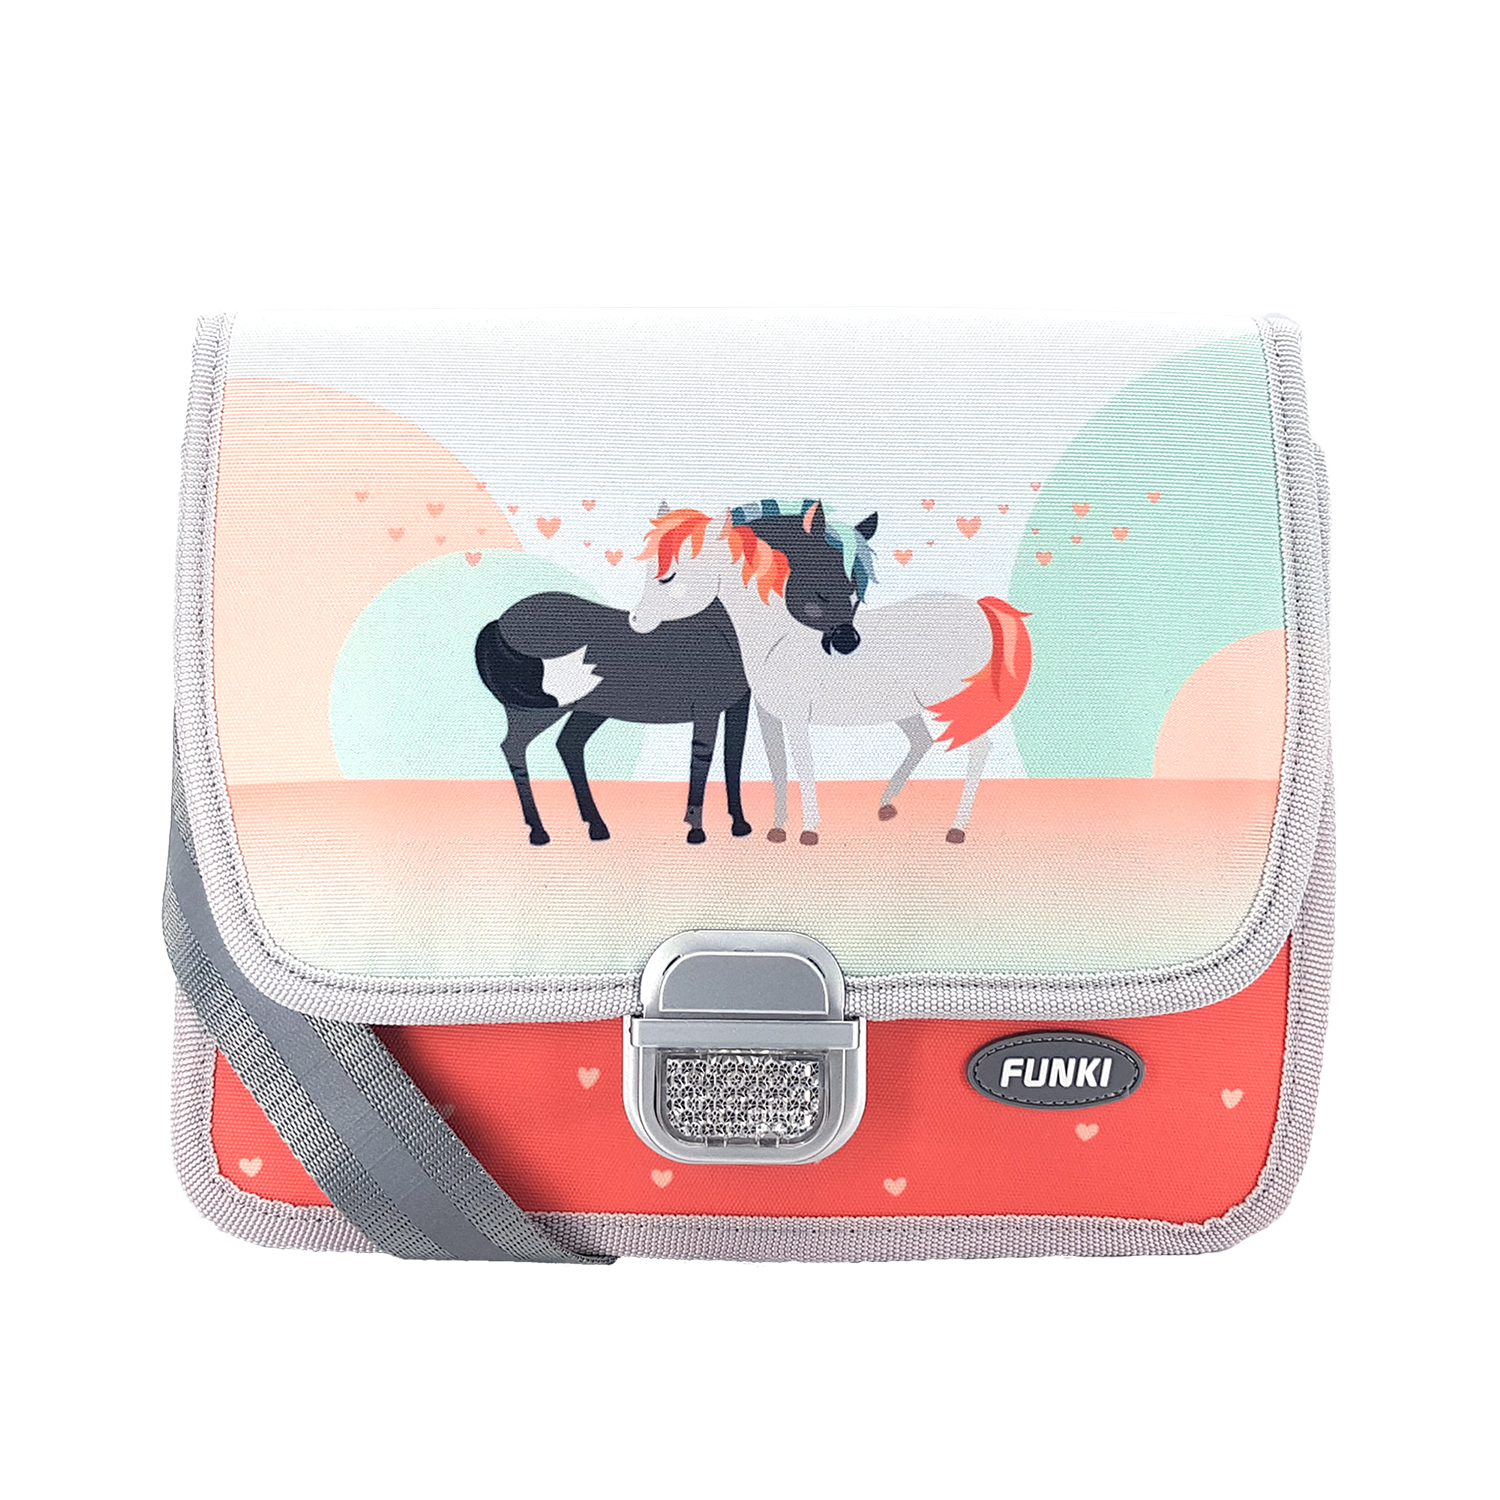 FUNKI Sac maternelle Horses in Love 6020.036 multicolor 265x200x70mm